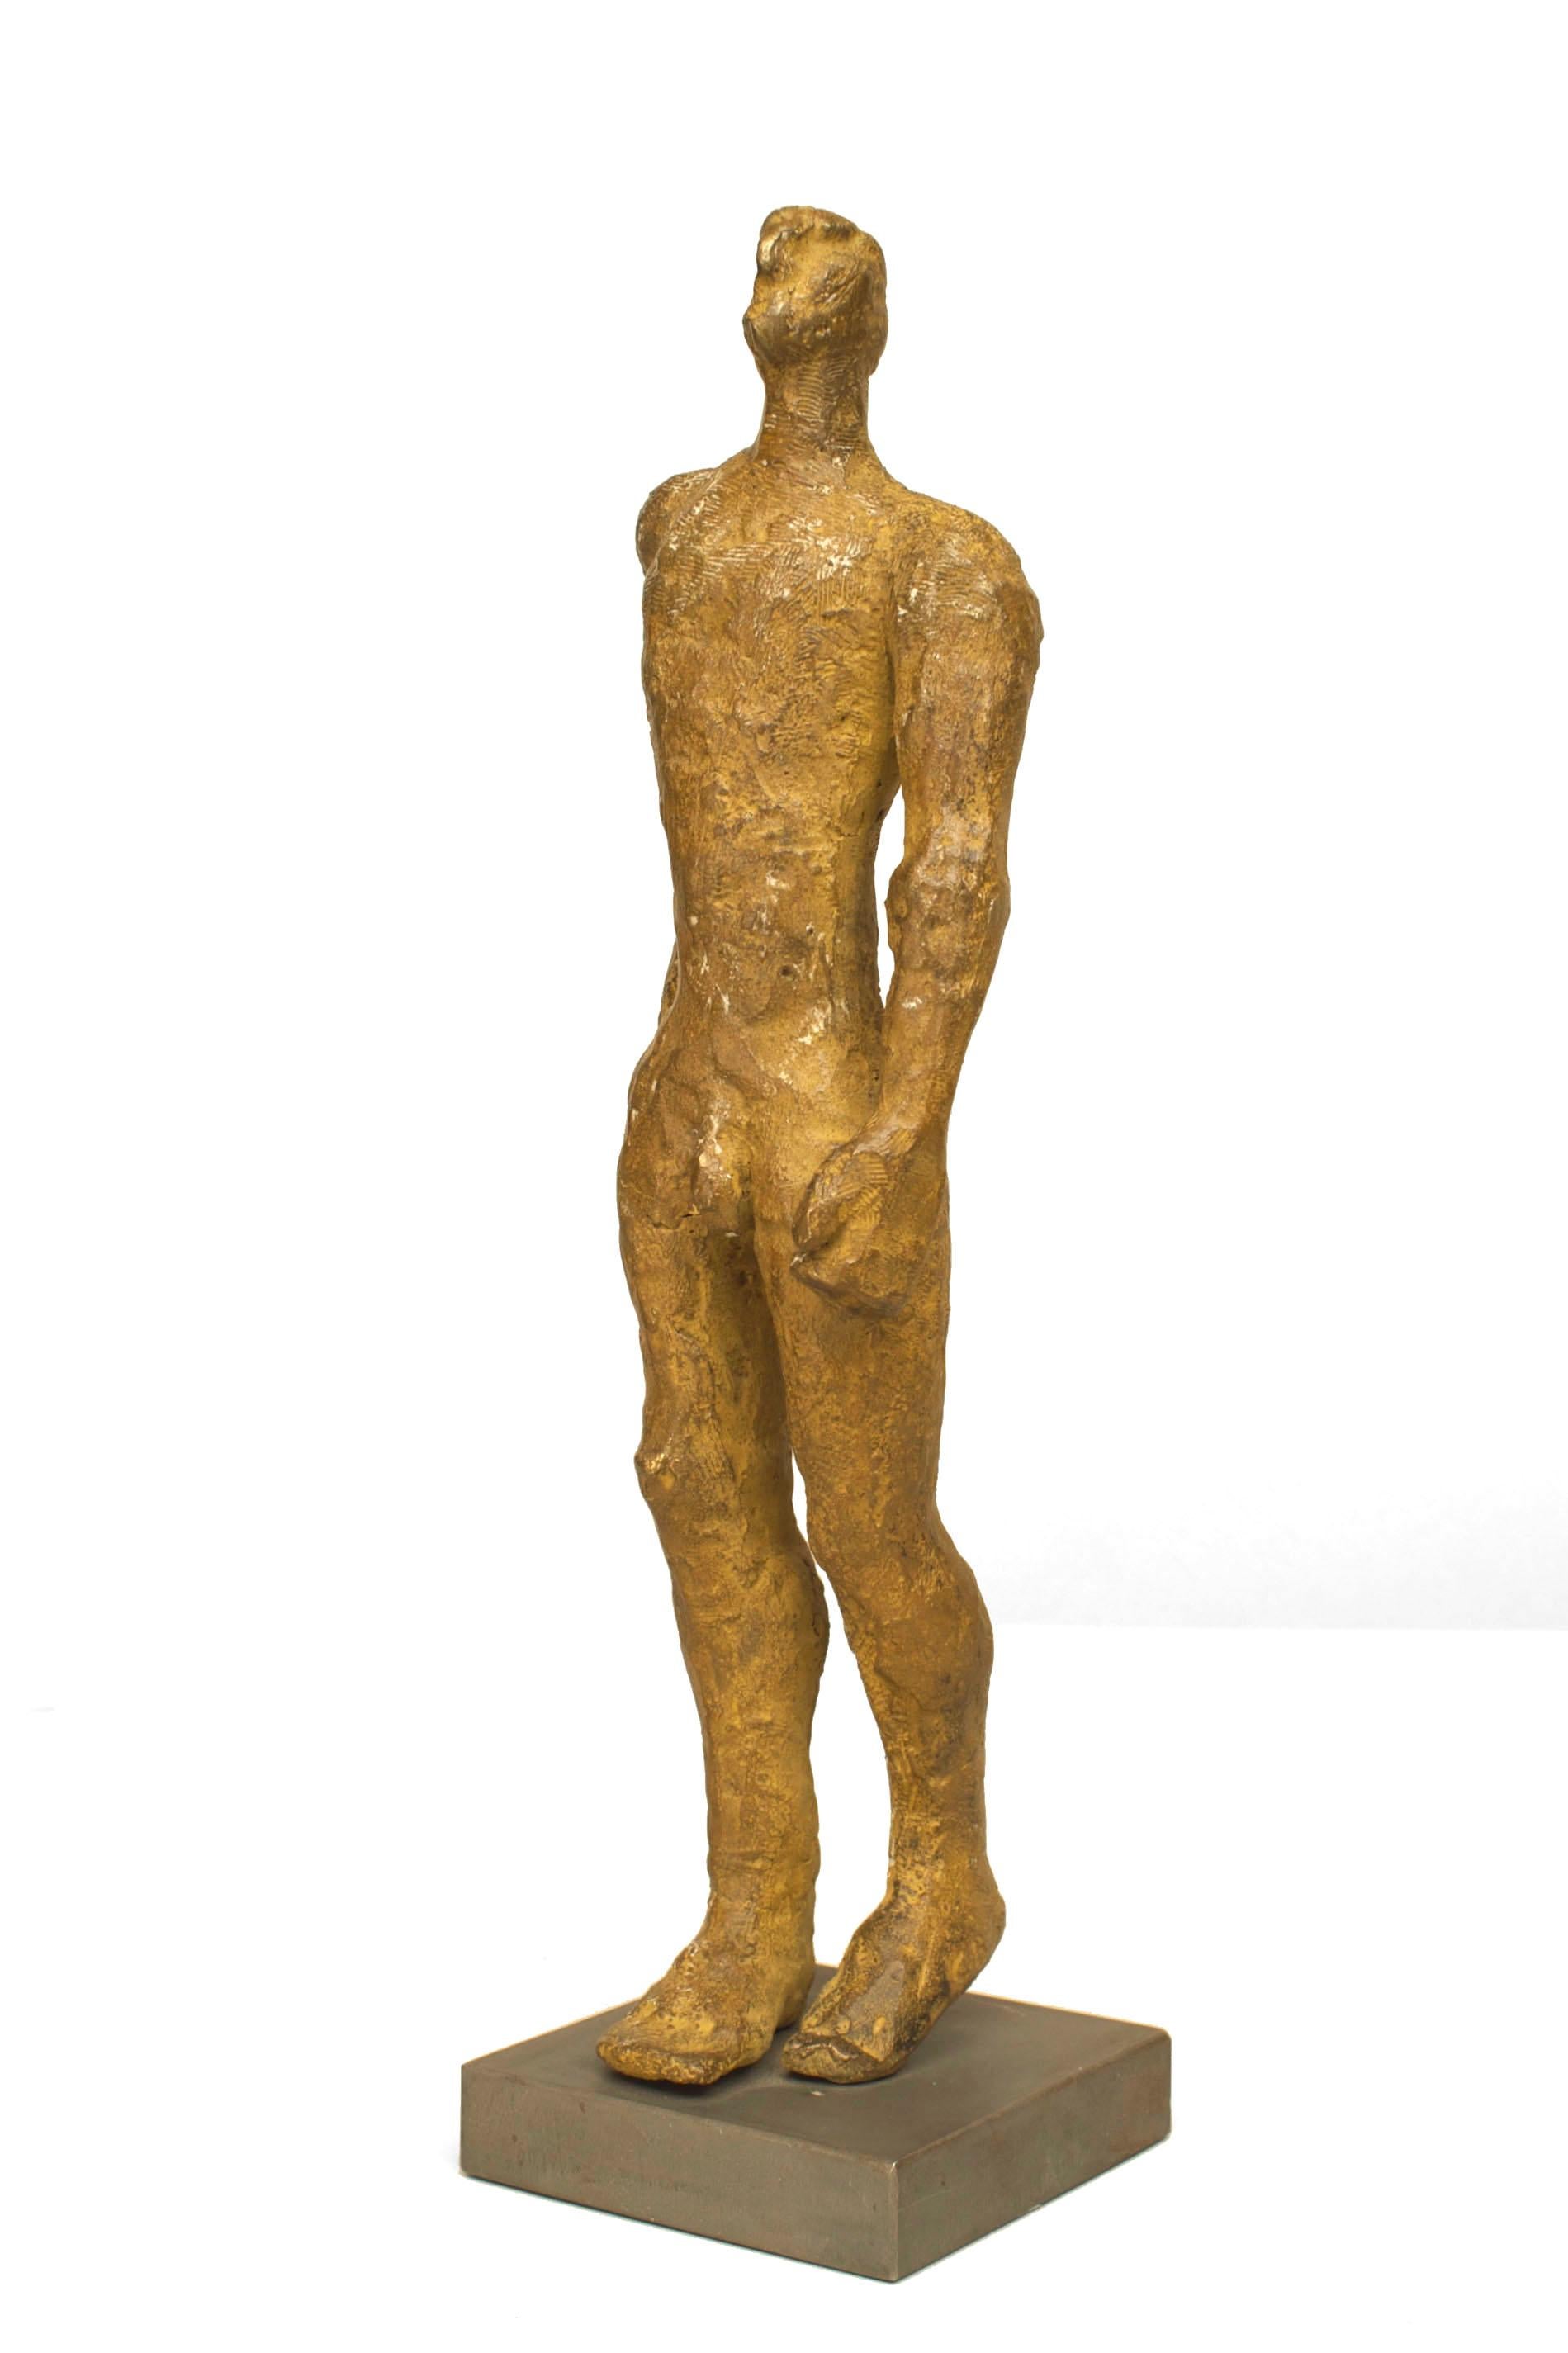 Contemporary American Post-Modern Bronze Figure Sculpture